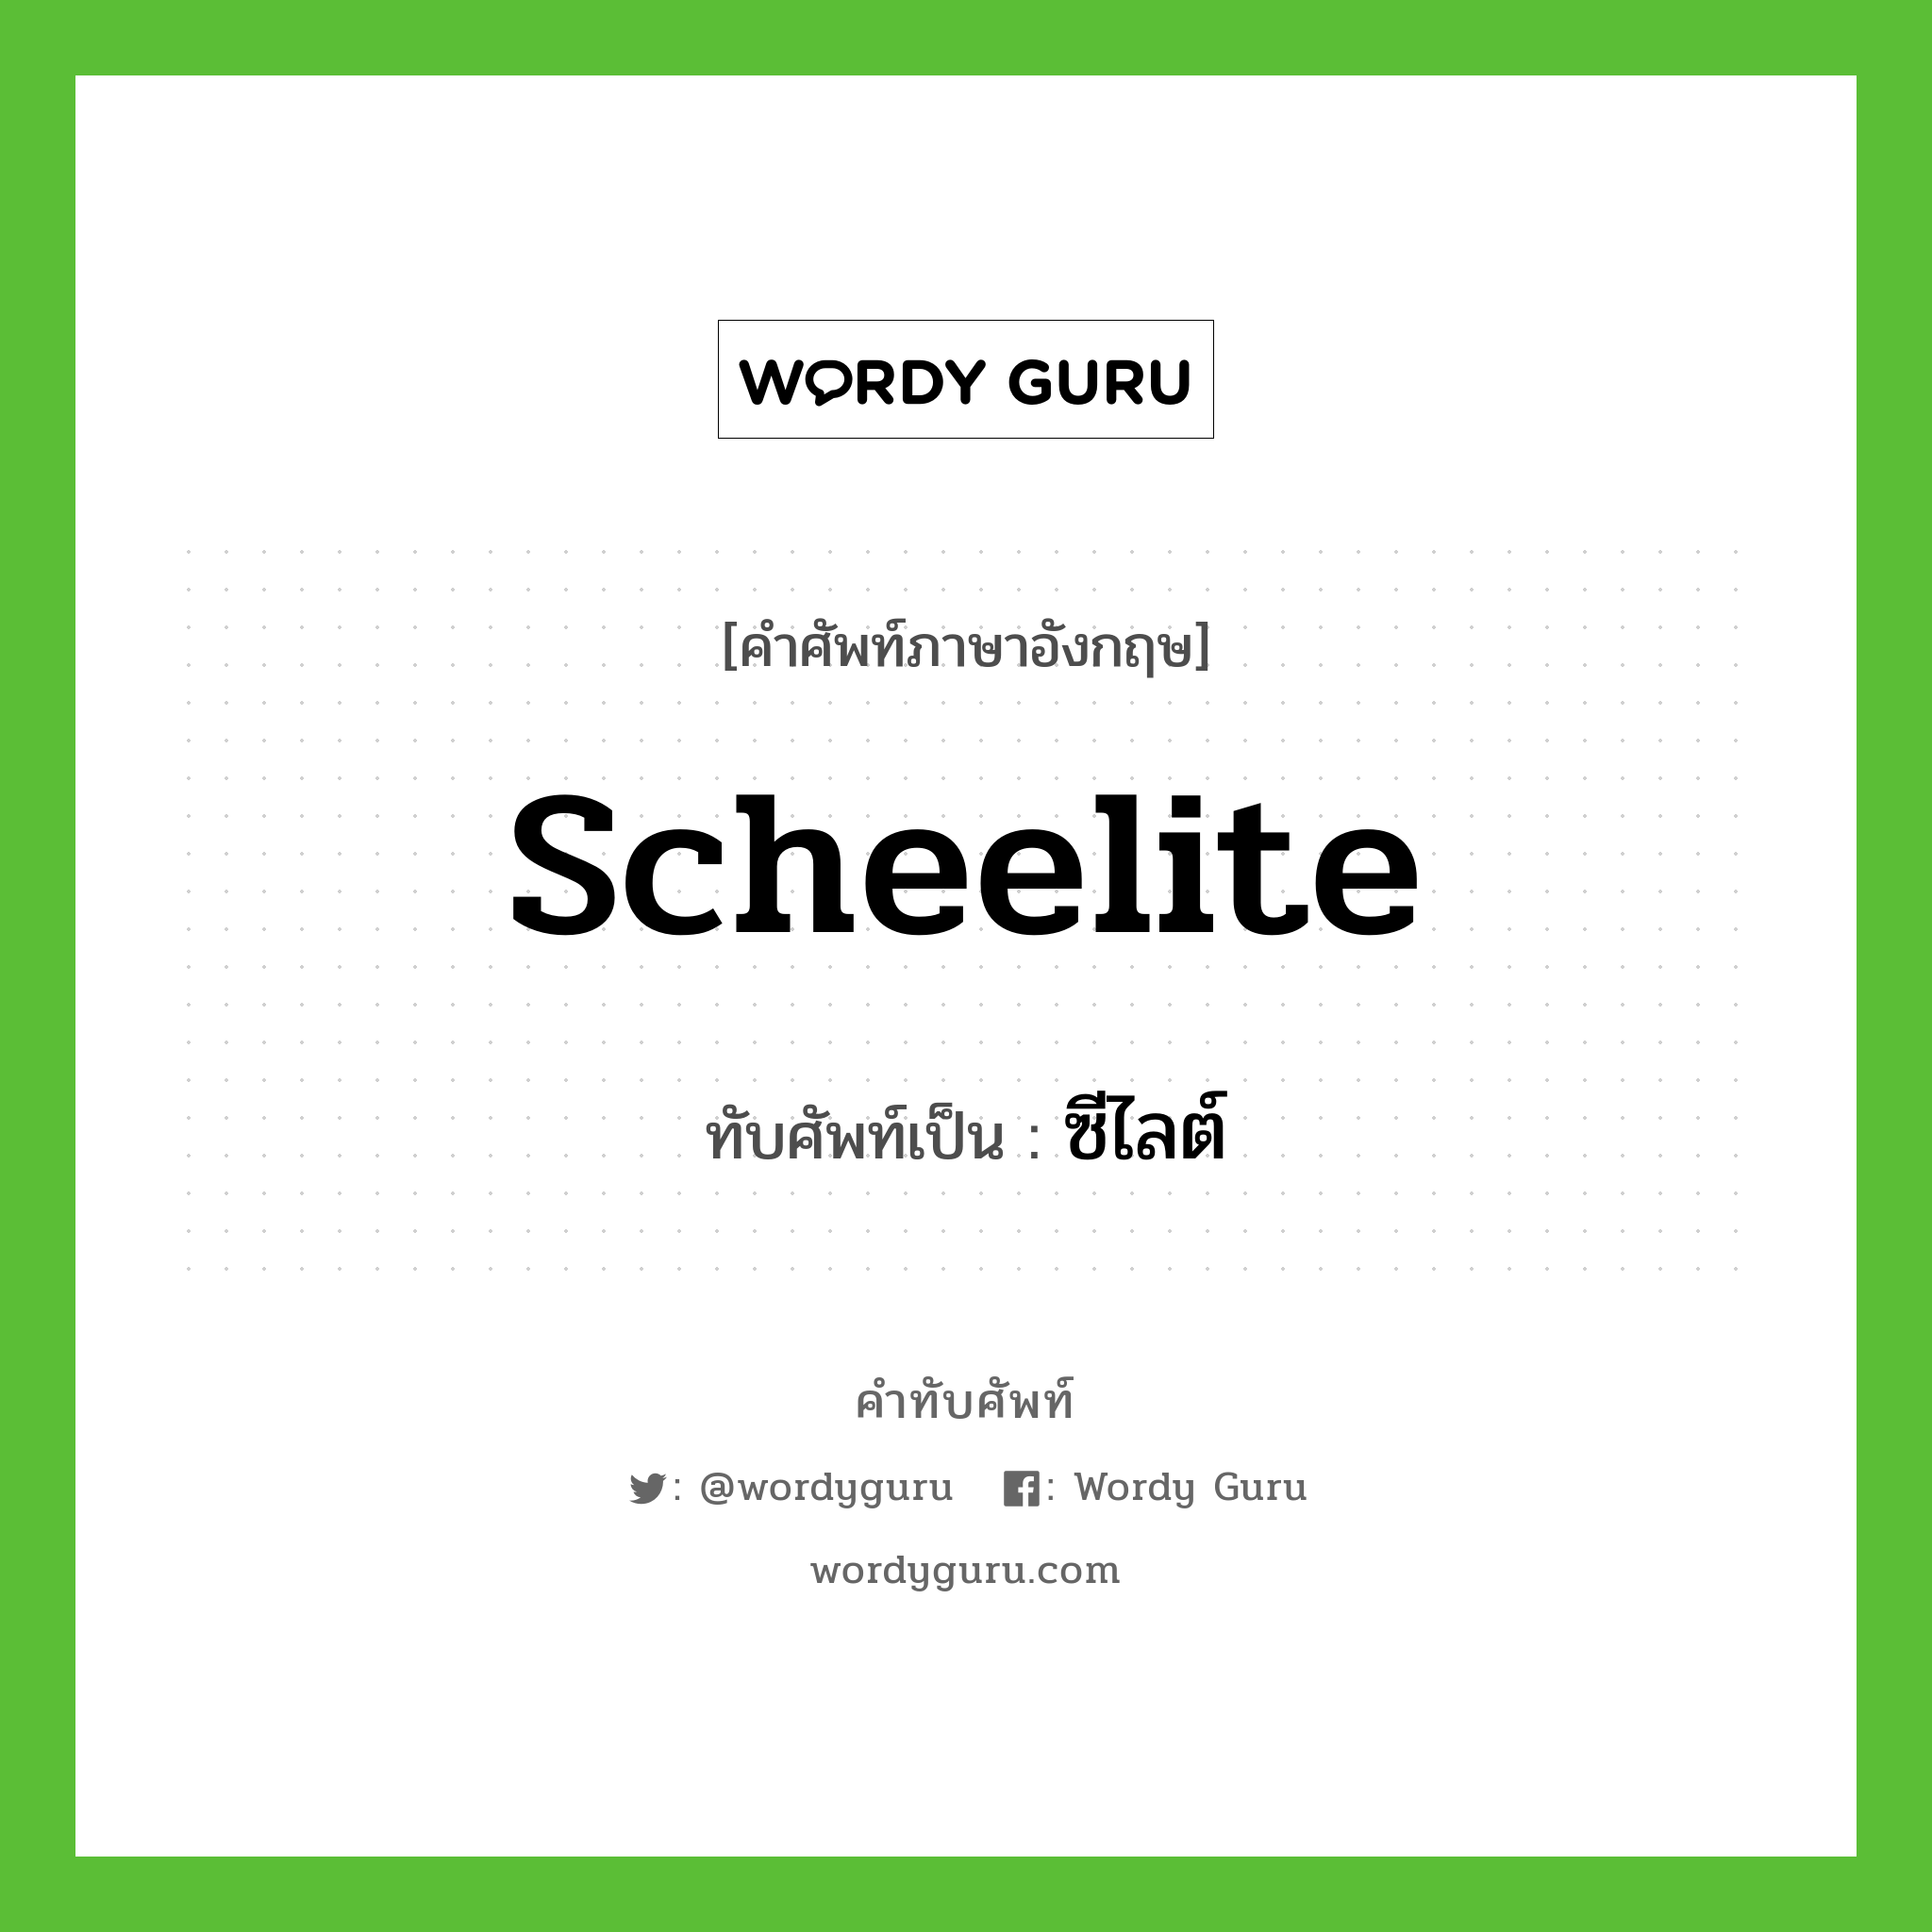 scheelite เขียนเป็นคำไทยว่าอะไร?, คำศัพท์ภาษาอังกฤษ scheelite ทับศัพท์เป็น ซีไลต์